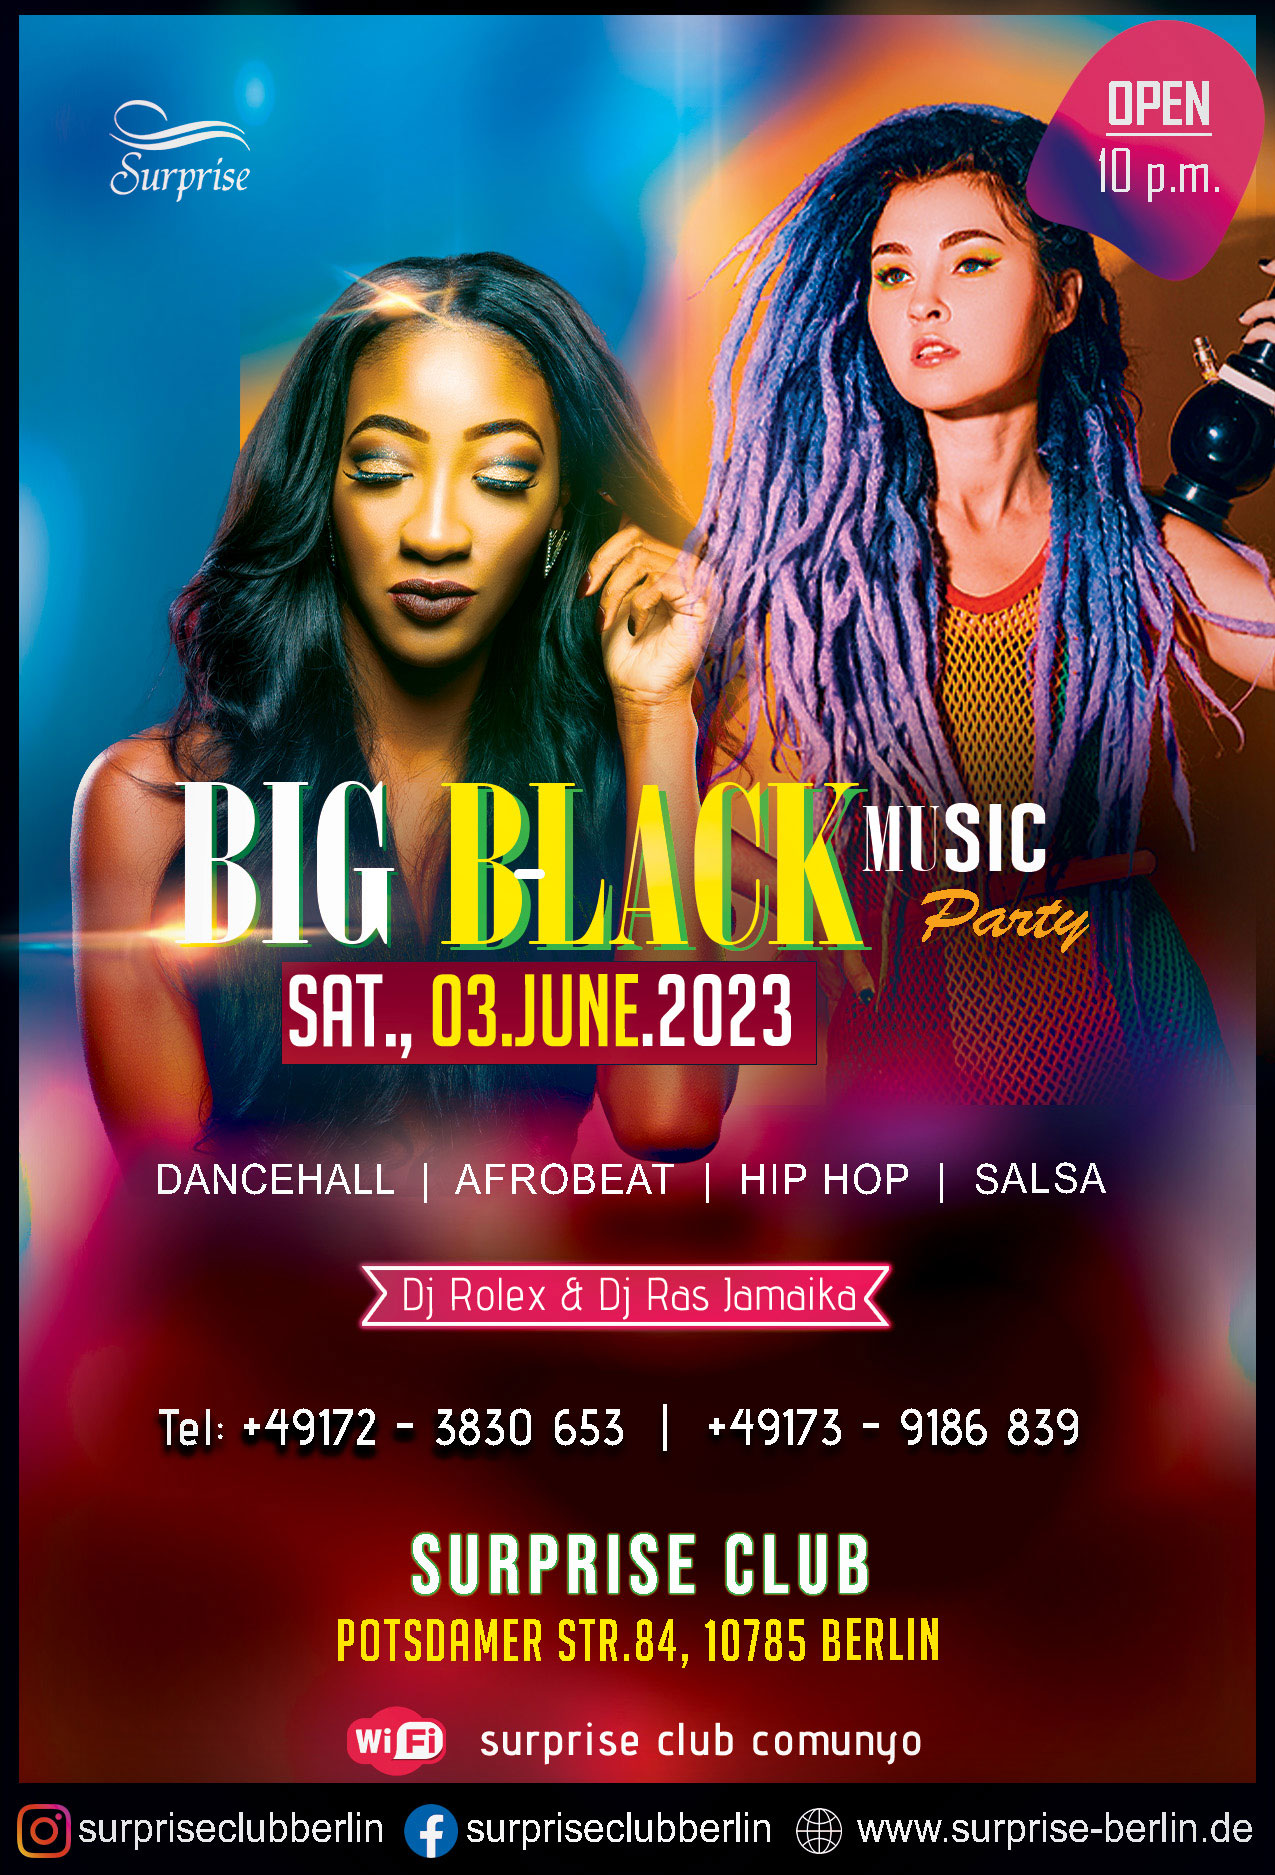 Black music party in Surprise night club Berlin, night life Berlin